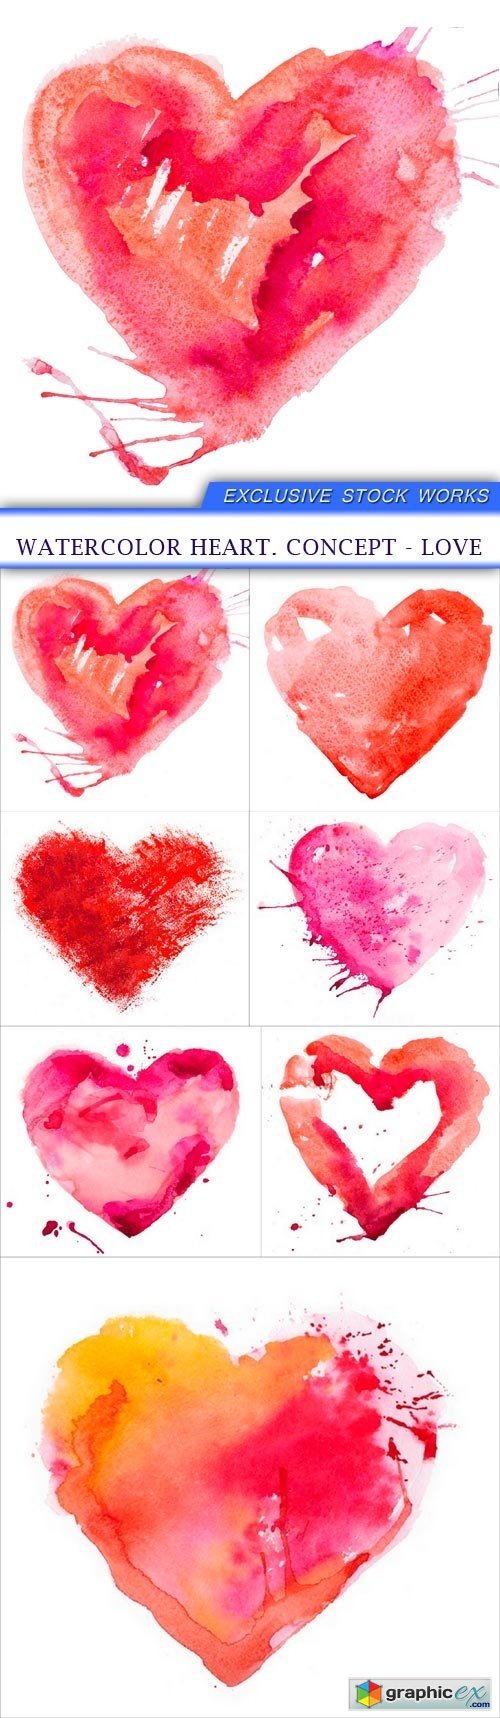 watercolor heart. Concept - love 7X JPEG